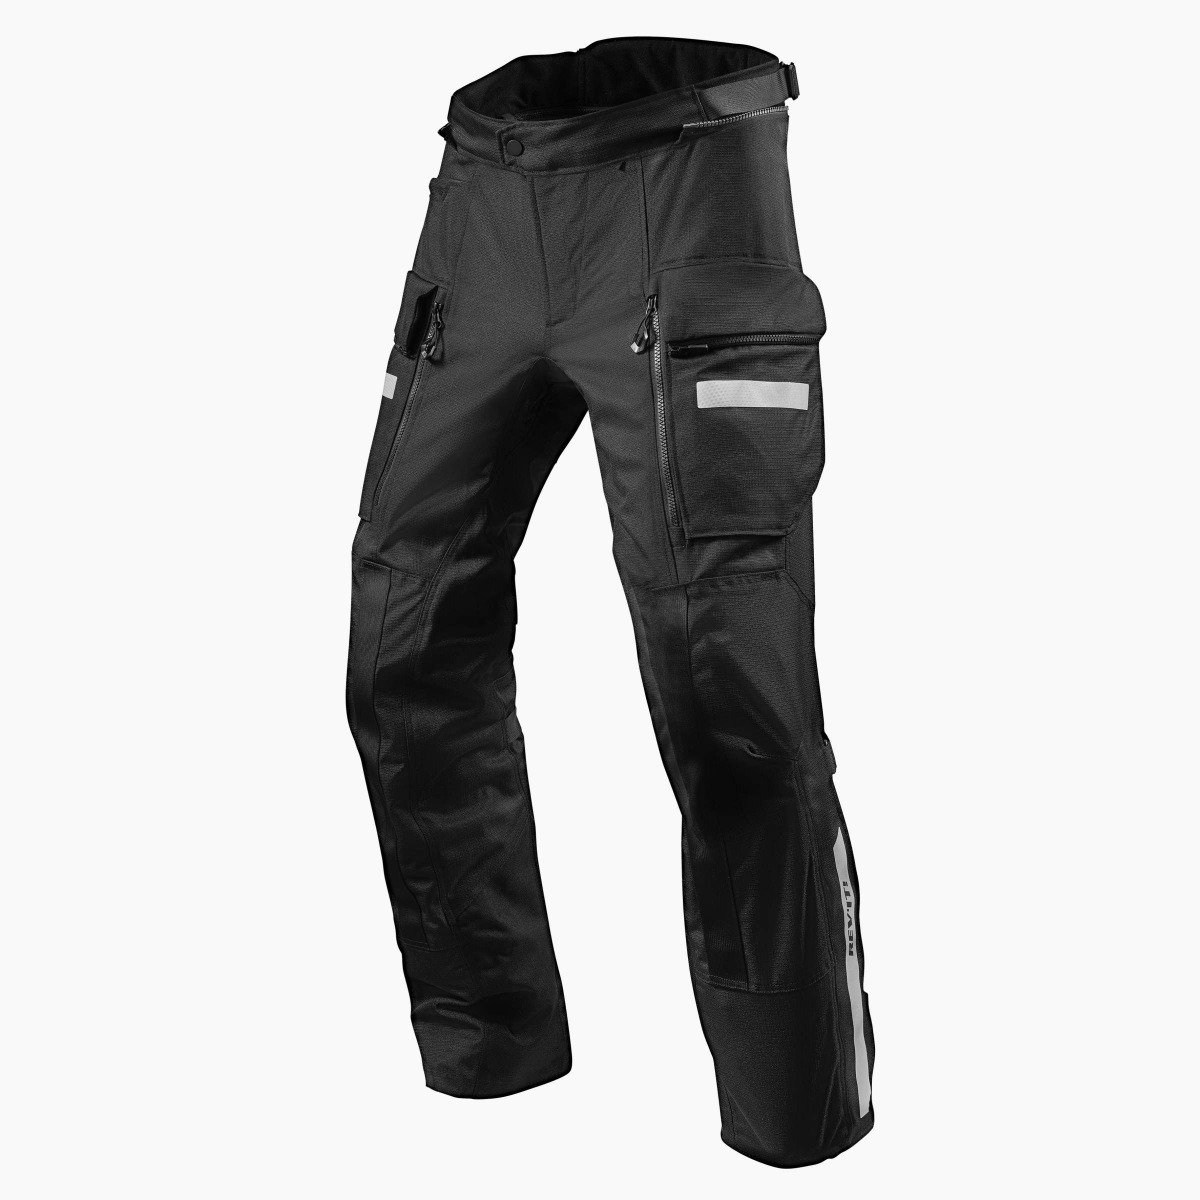 Image of REV'IT! Sand 4 H2O Short Black Motorcycle Pants Size 2XL EN